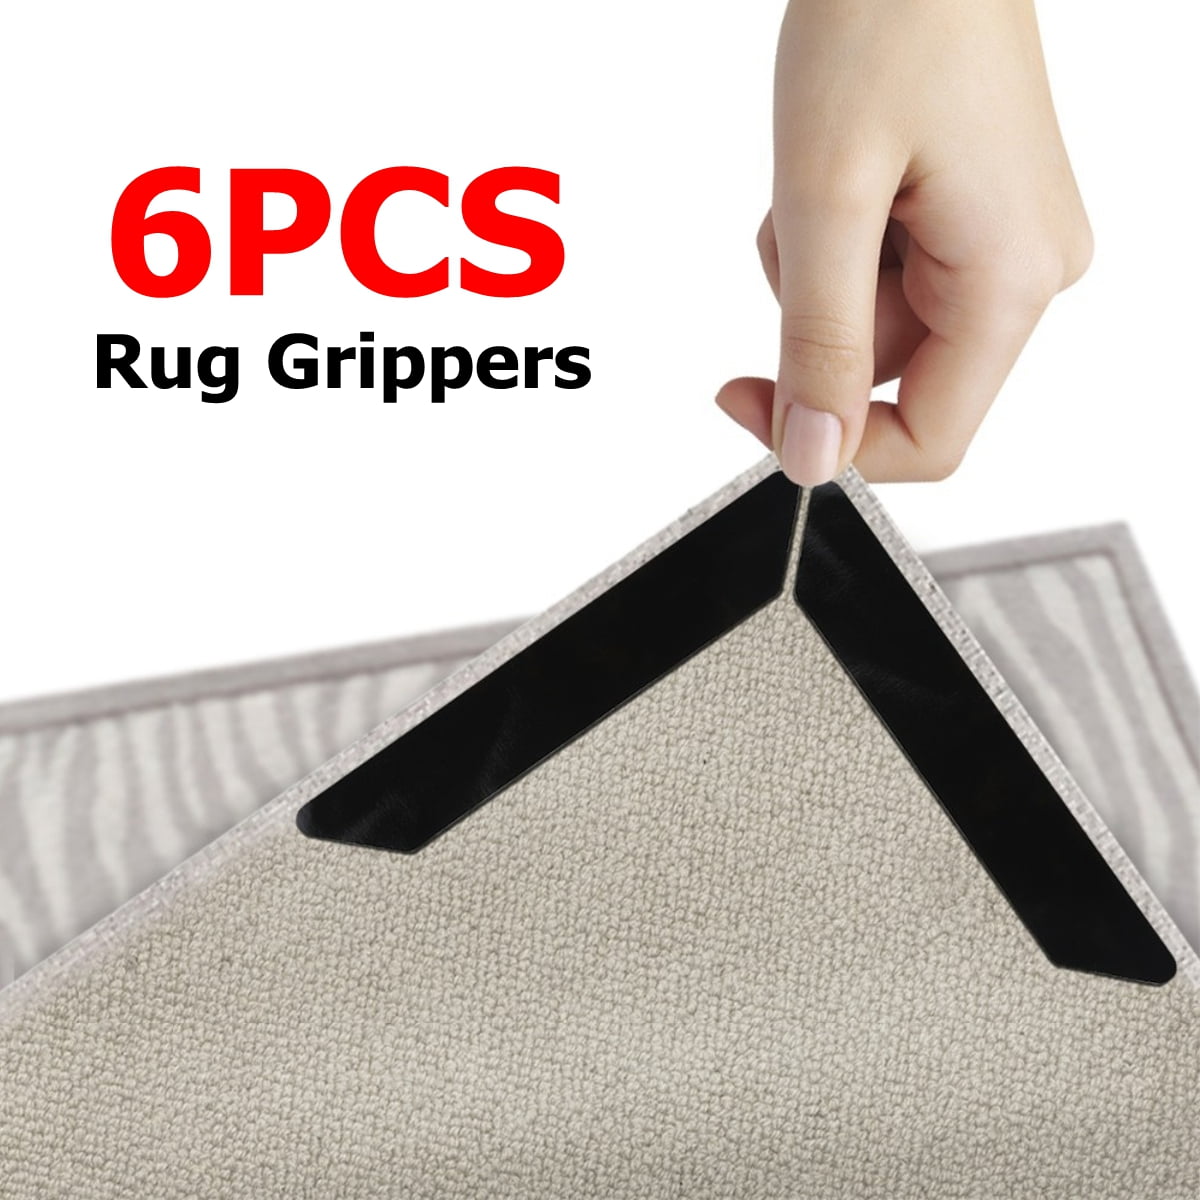 Rug Grippers Pad 6pcs Renewable, Best Rug Tape For Hardwood Floors